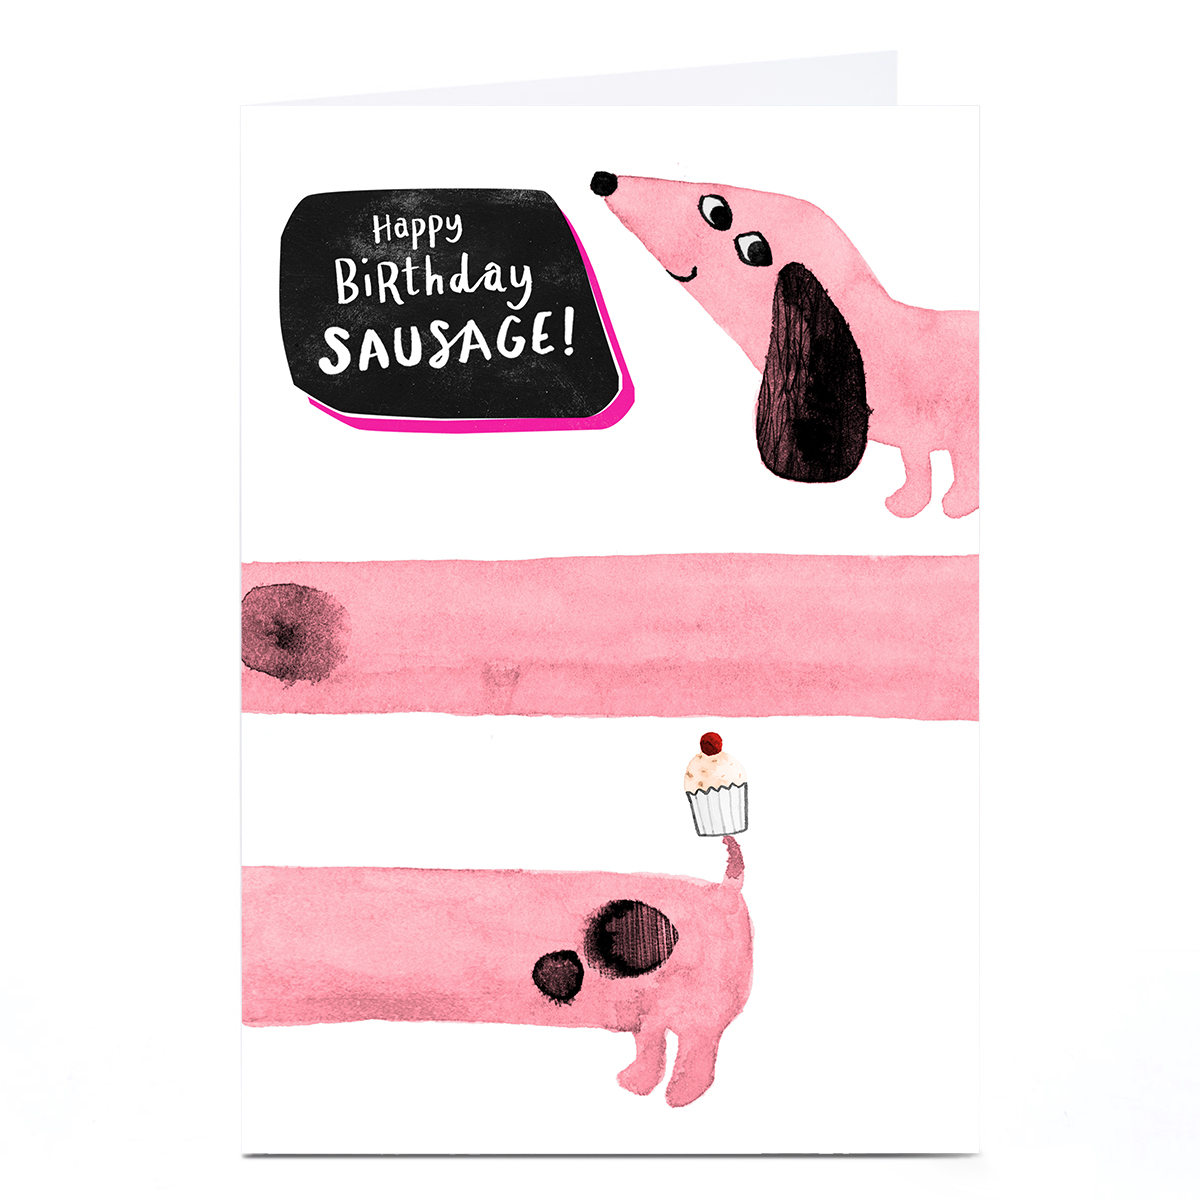 Personalised Andrew Thornton Birthday Card - Birthday Sausage